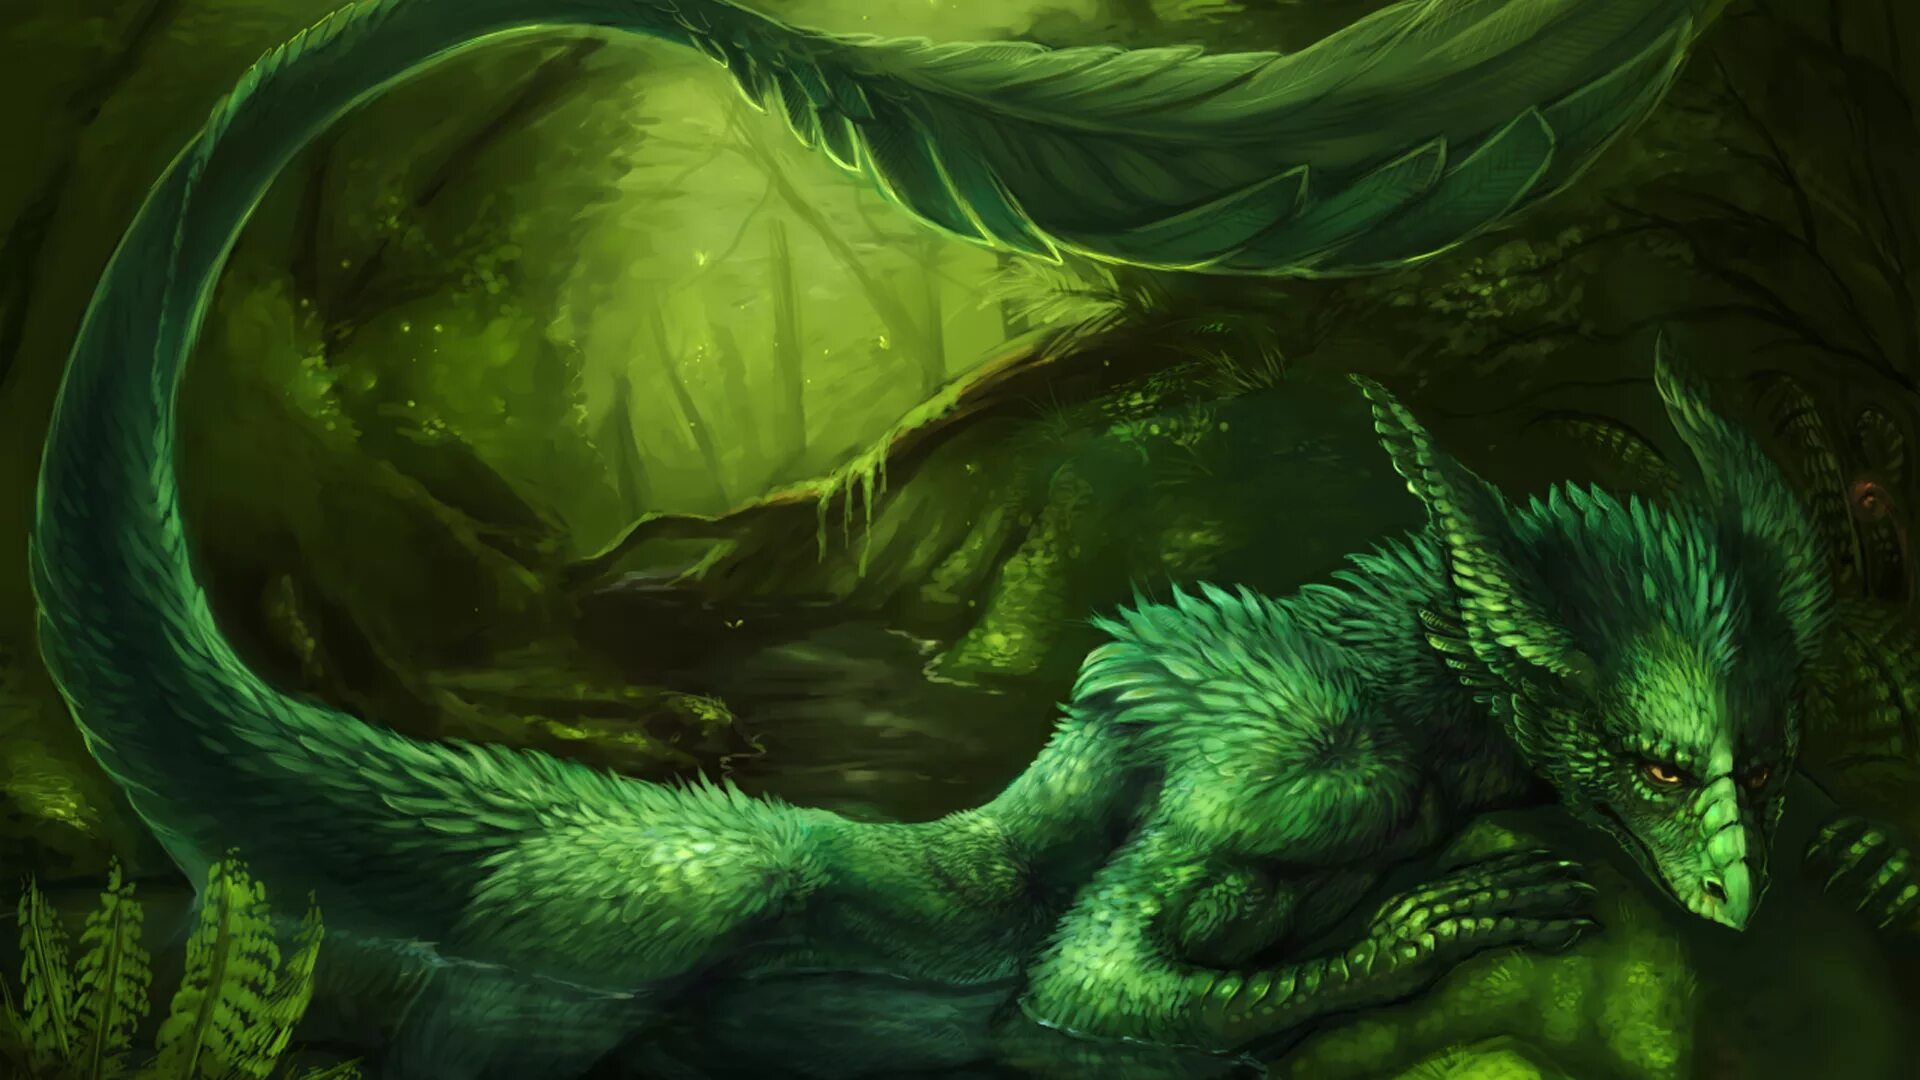 Брим зелёный дракон. Зелёный дракон виверна. Зеленый дракон Цинлун. Бело-зеленый дракон ВИВЕРН. Какой зеленый дракон